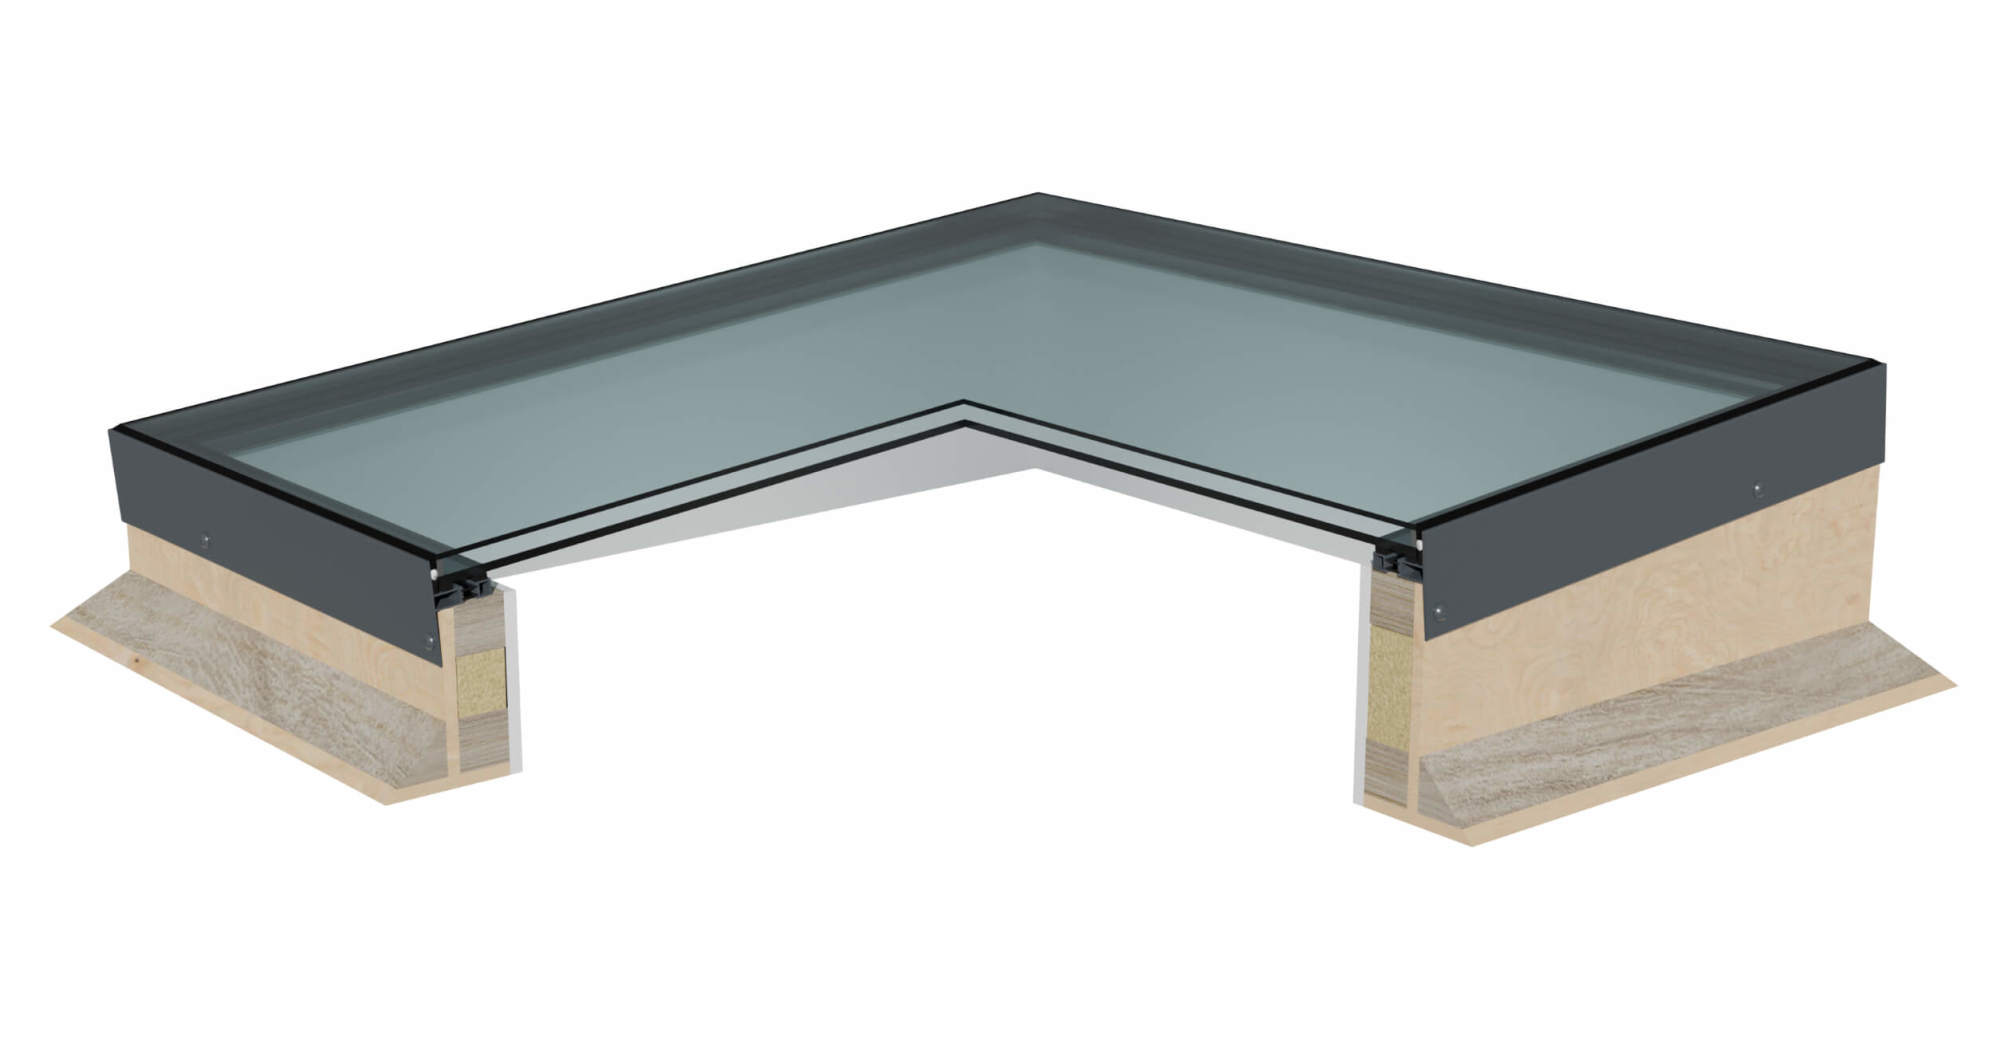 A flat glass rooflight